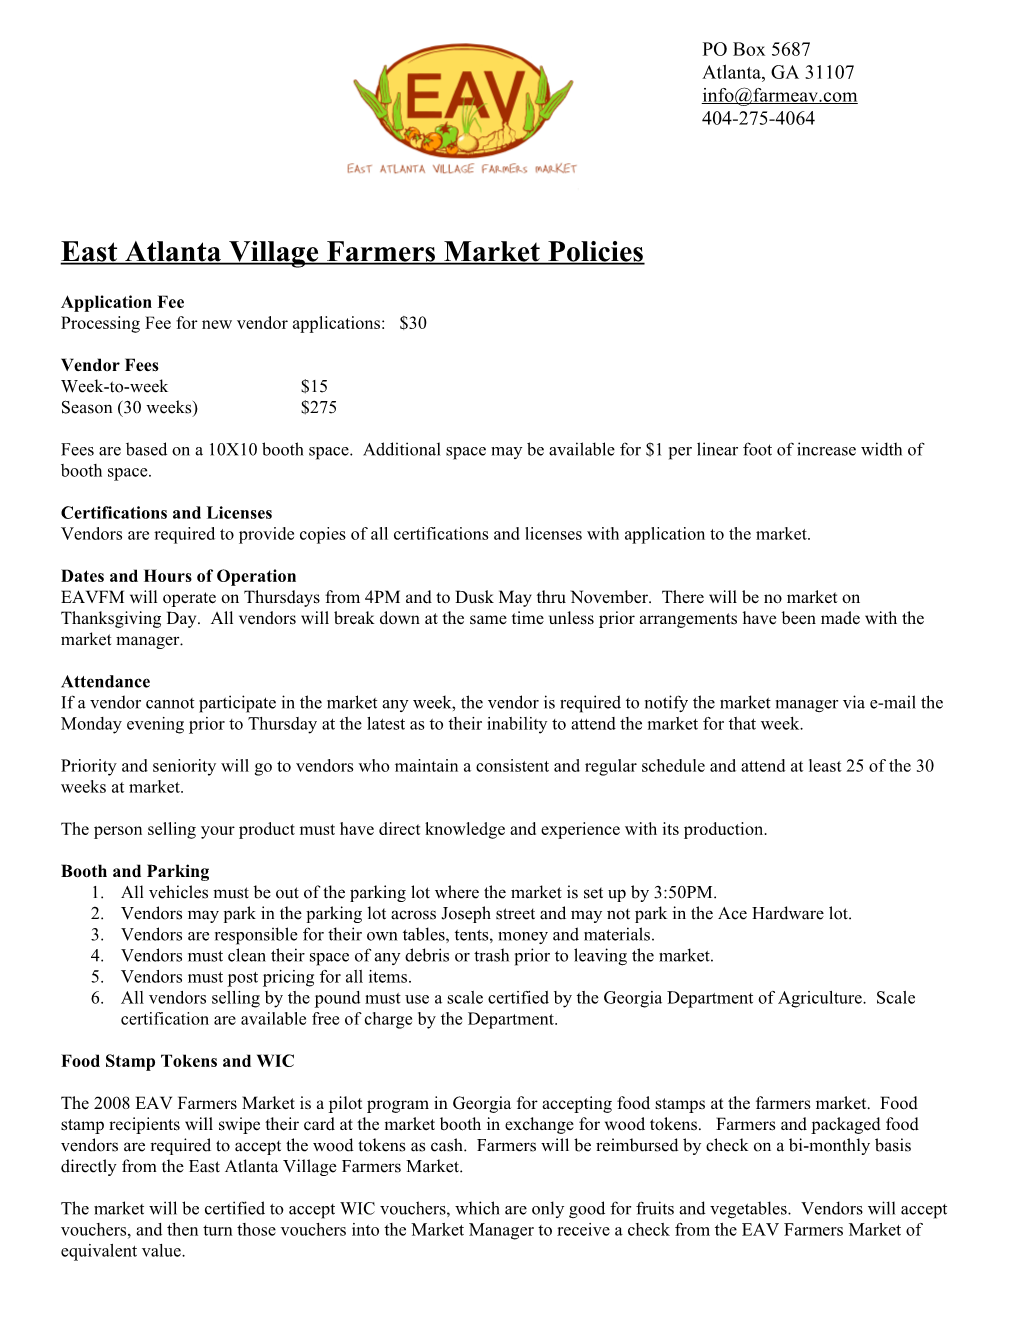 EAV Farmers Market Fruit and Vegetable Producer Application